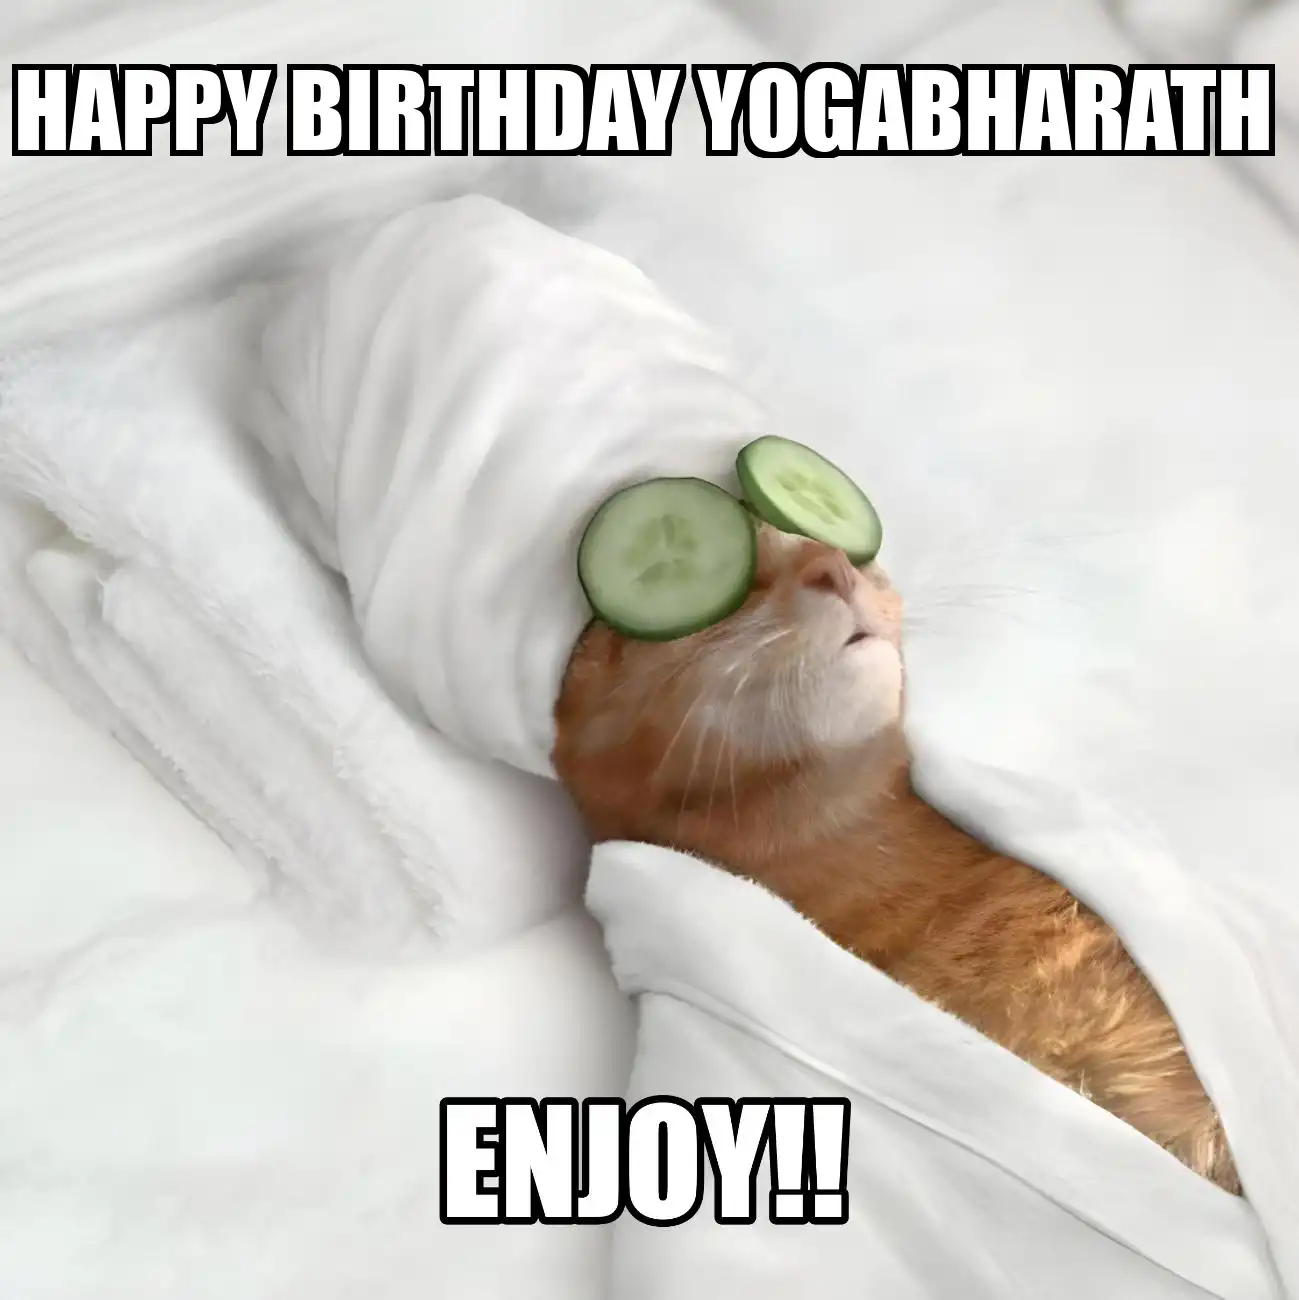 Happy Birthday Yogabharath Enjoy Cat Meme